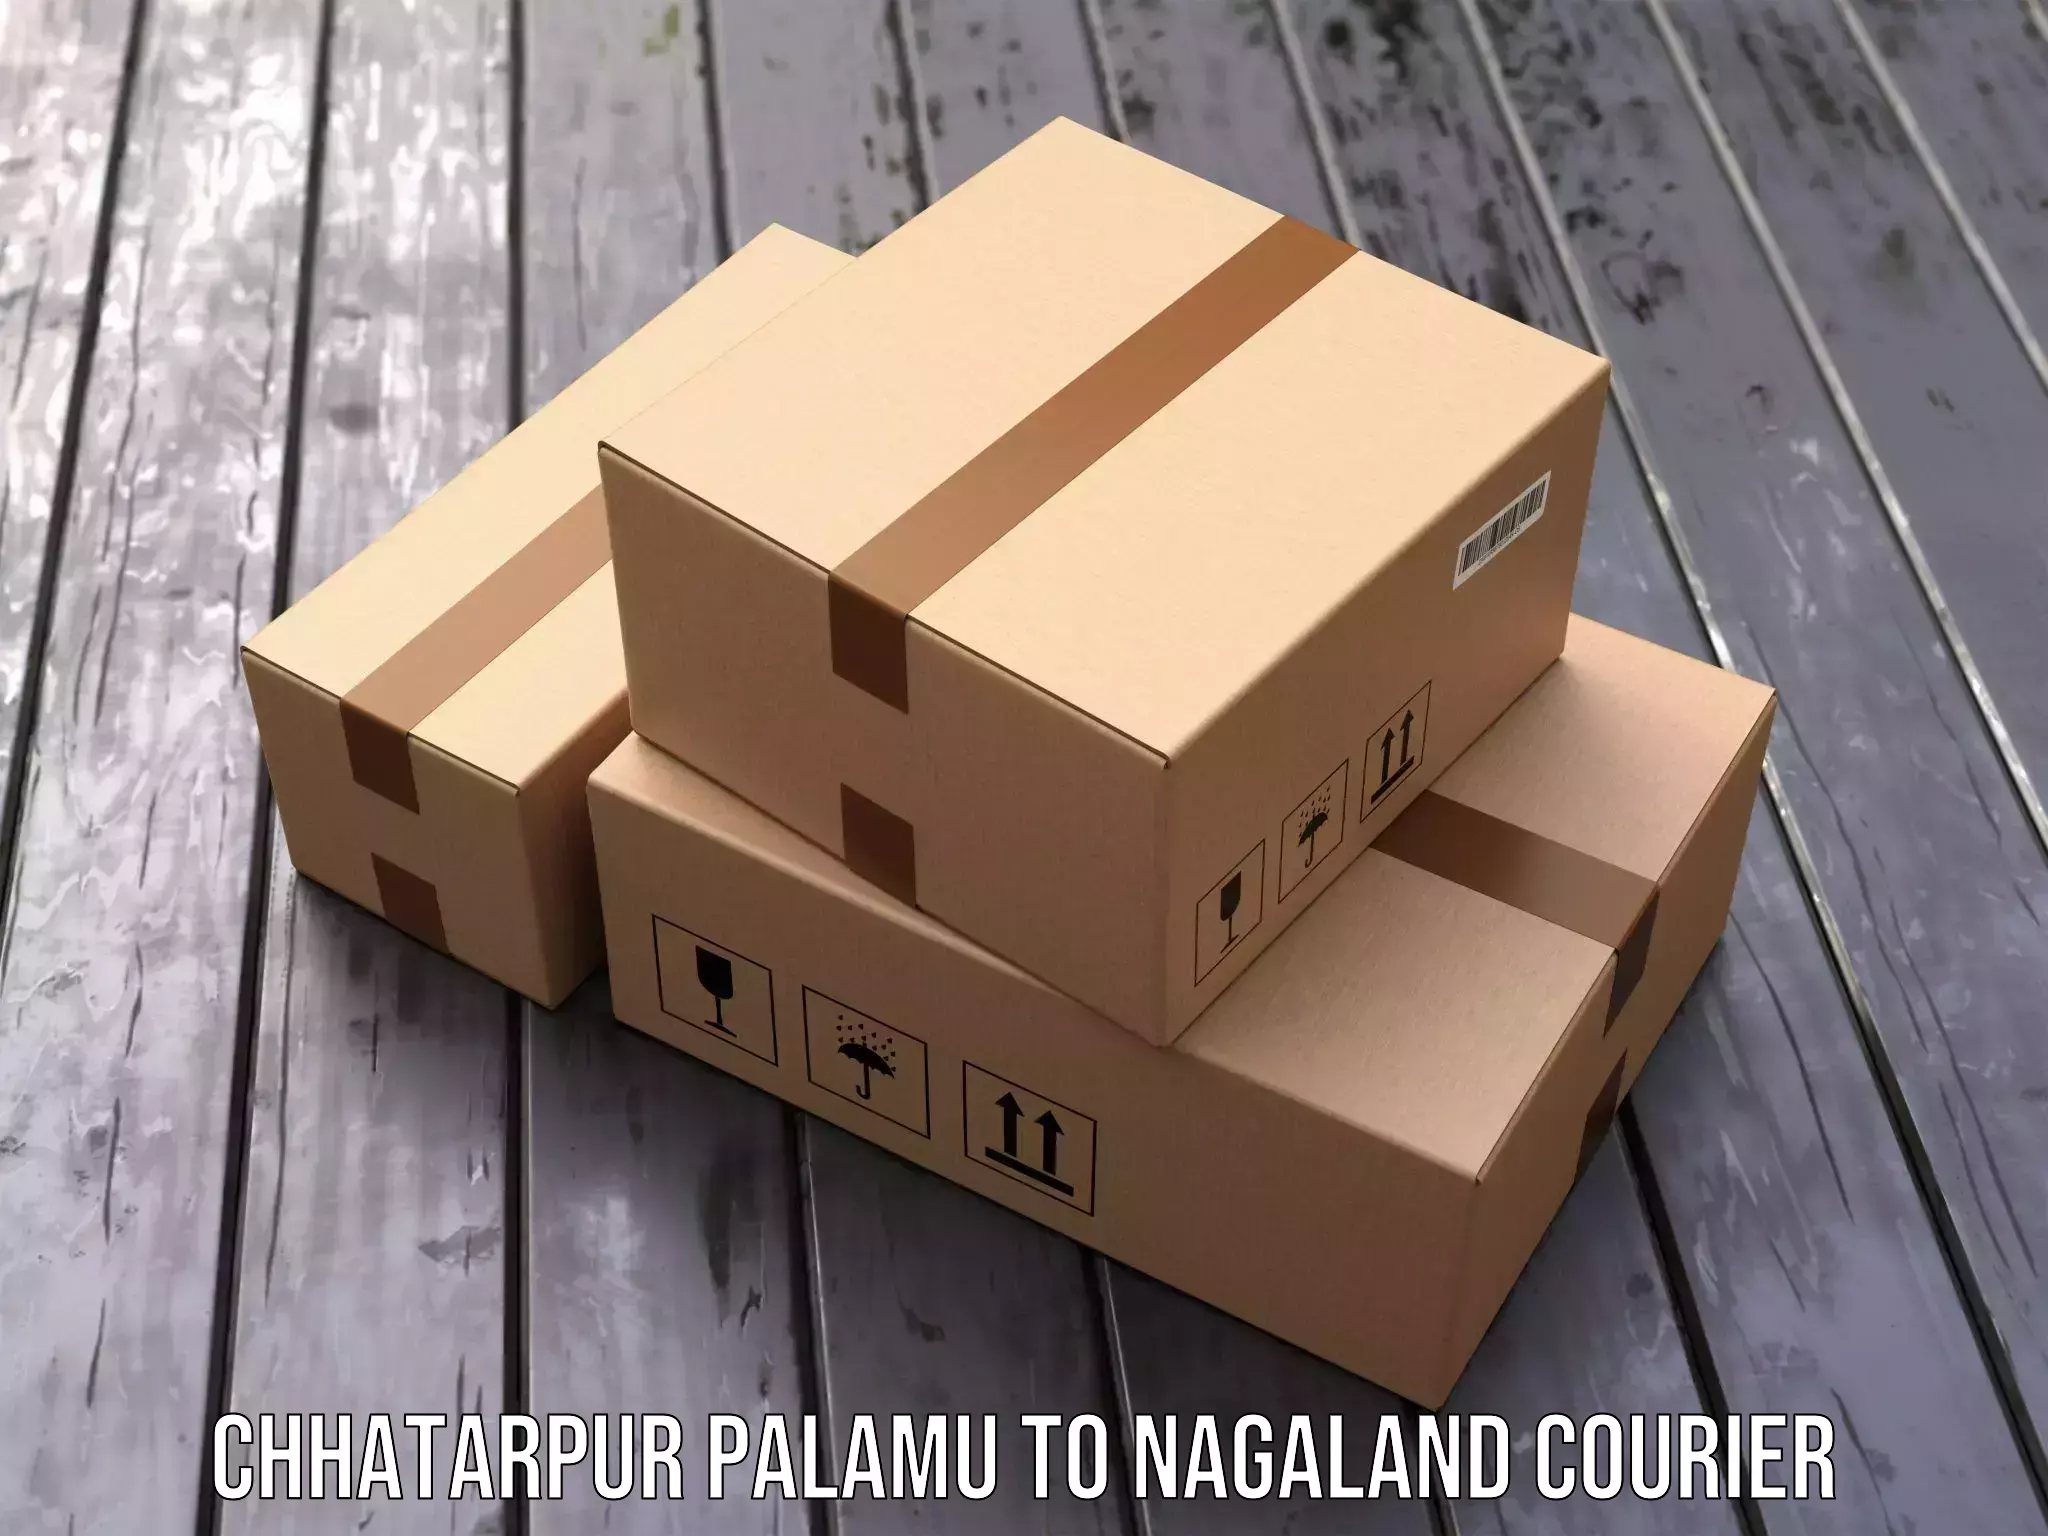 Reliable delivery network Chhatarpur Palamu to Nagaland